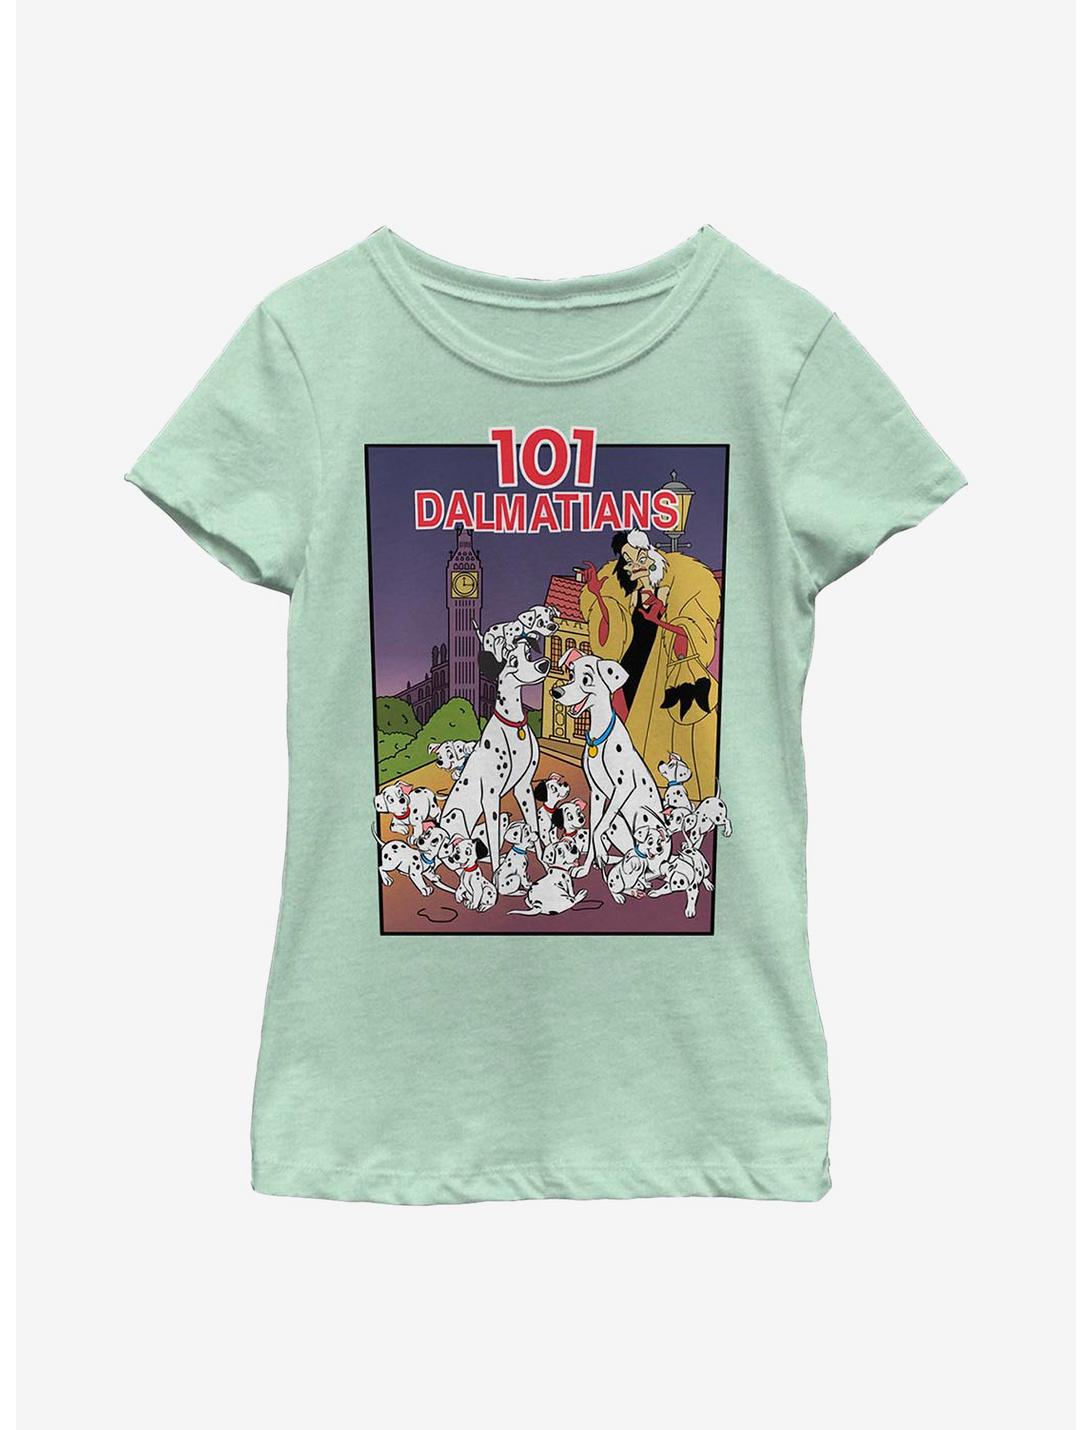 Disney 101 Dalmatians VHS Cover Youth Girls T-Shirt, MINT, hi-res